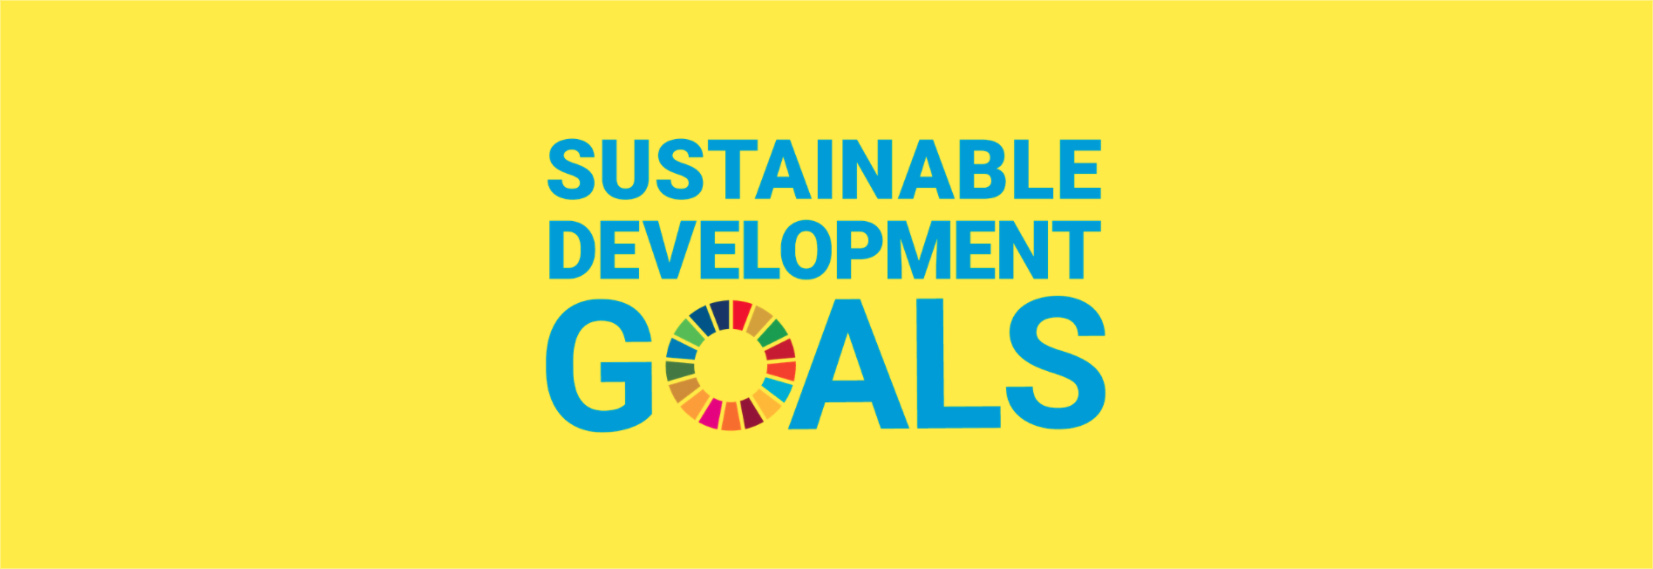 LEED for Cities and Communitiesが国連の持続可能な開発目標とどのように一致しているかを探る。